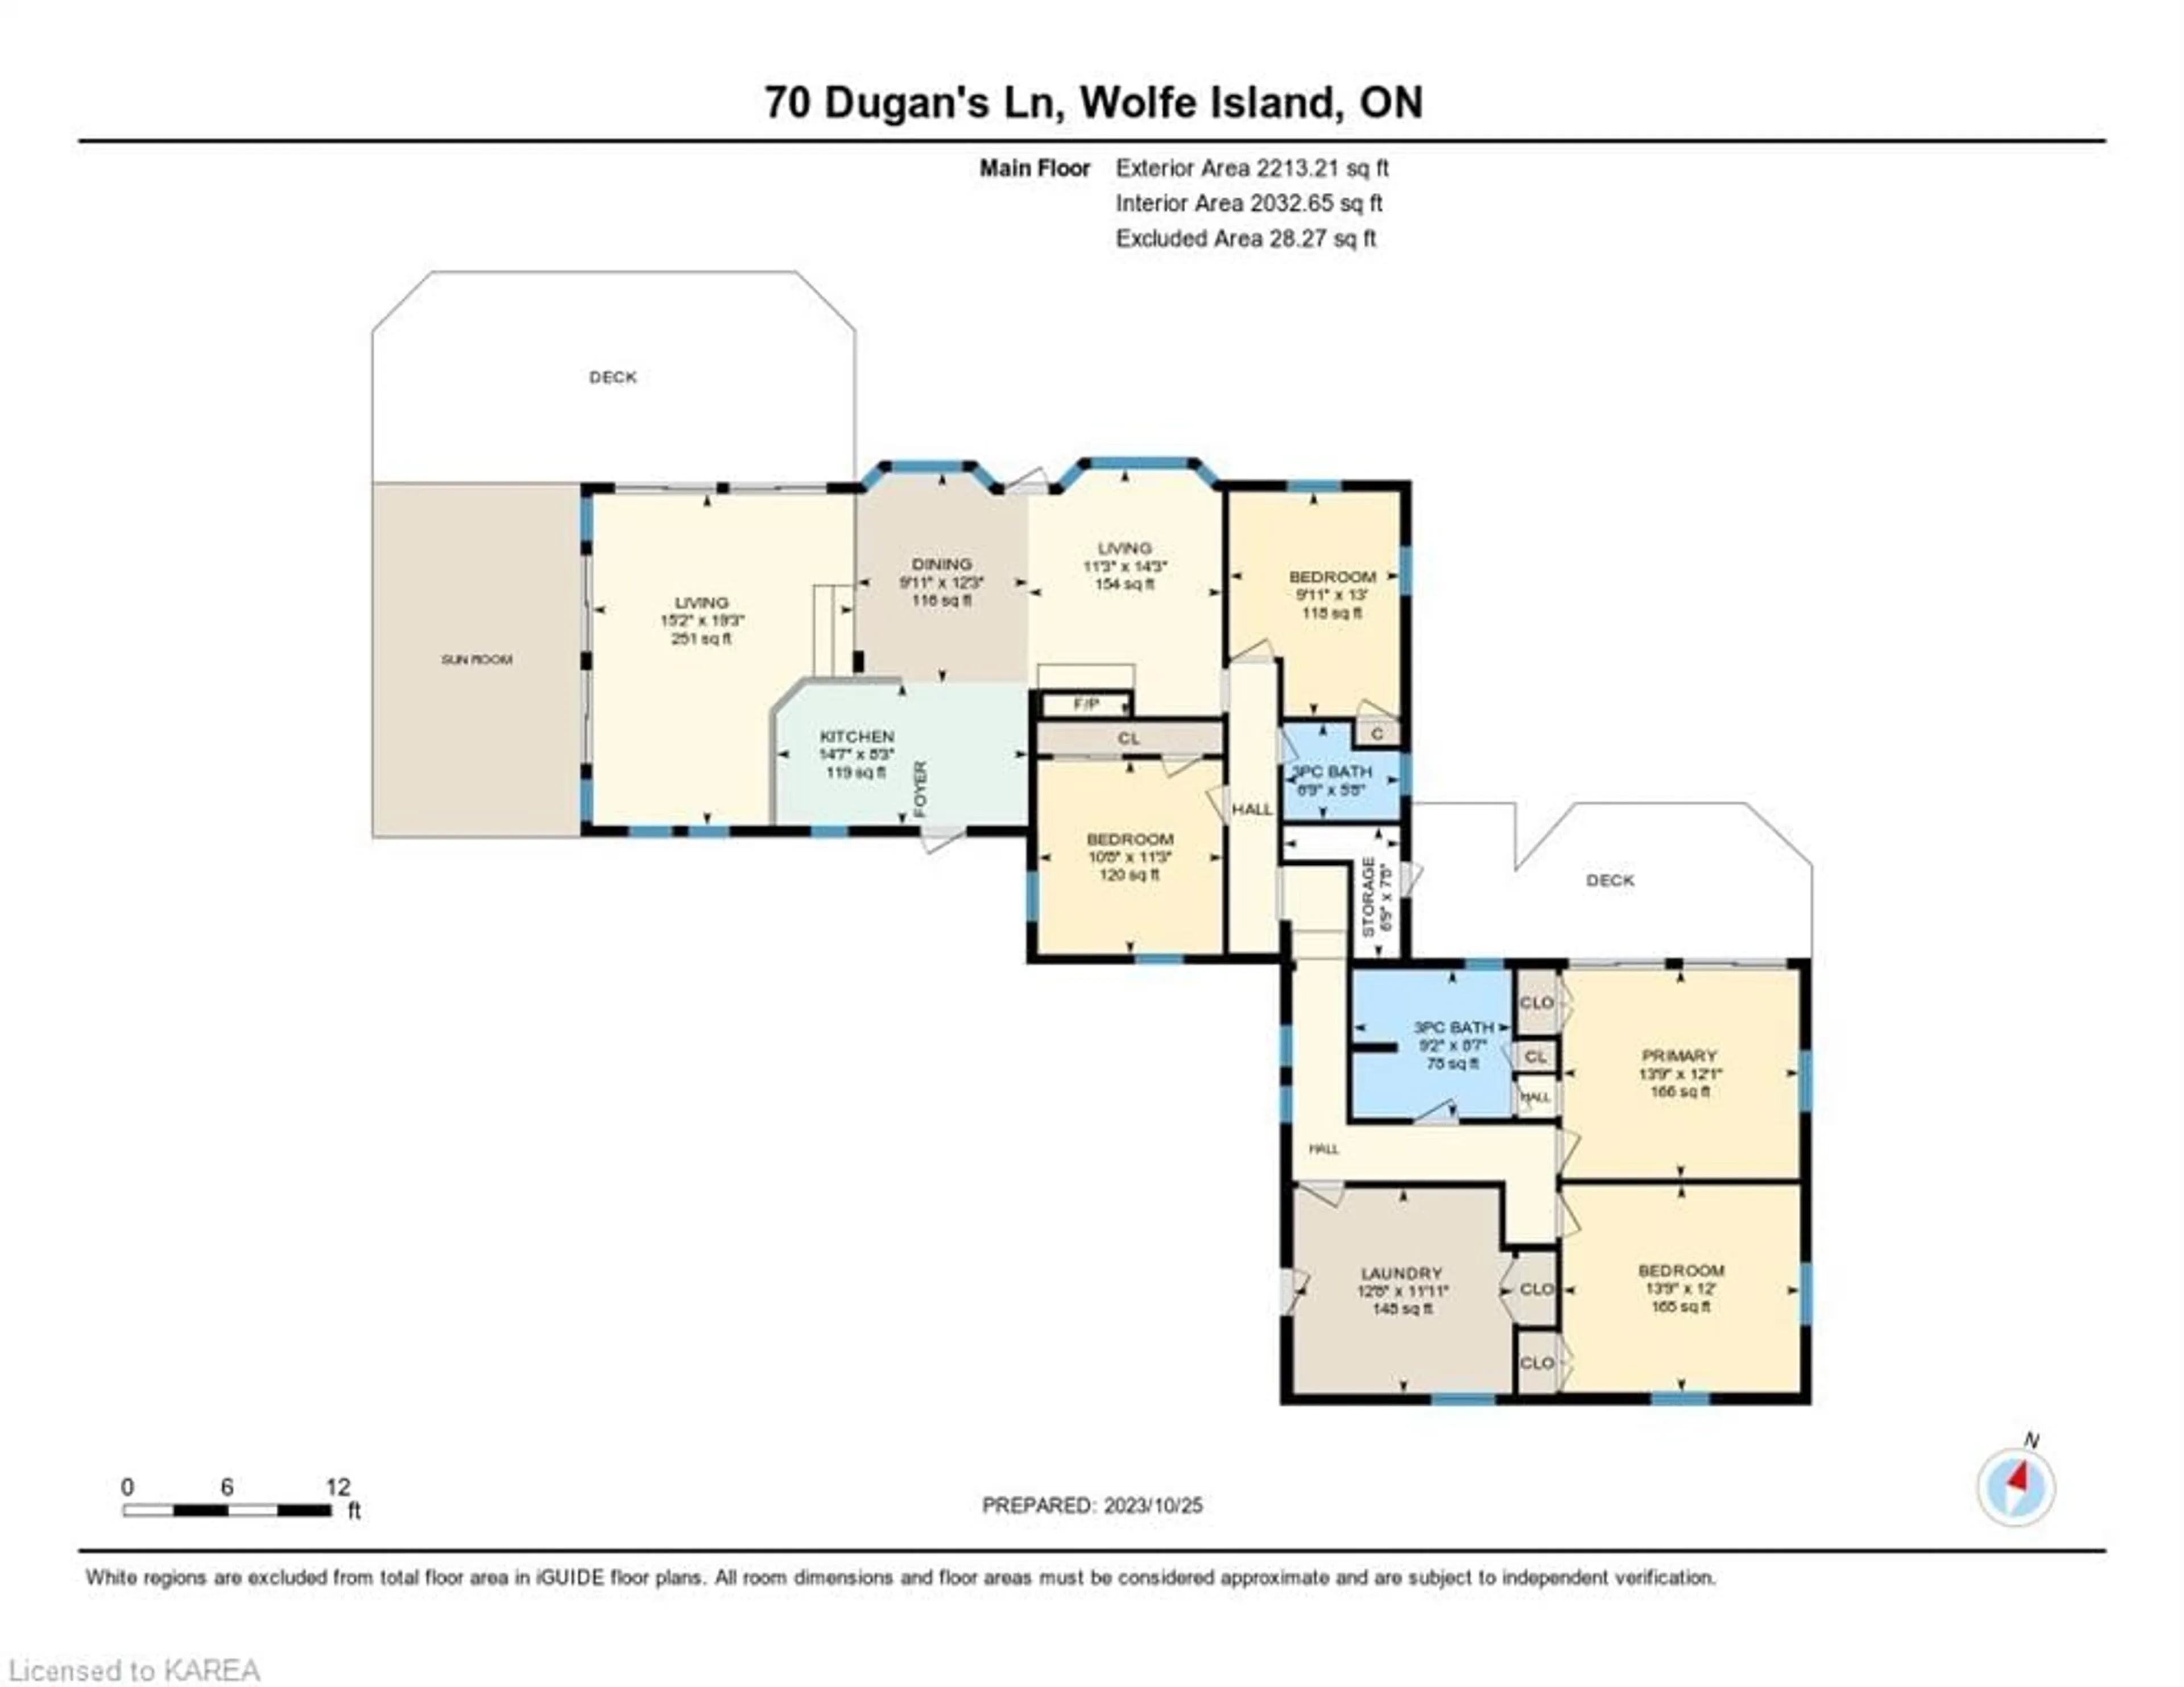 Floor plan for 70 Dugan's Lane, Wolfe Island Ontario K0H 2Y0